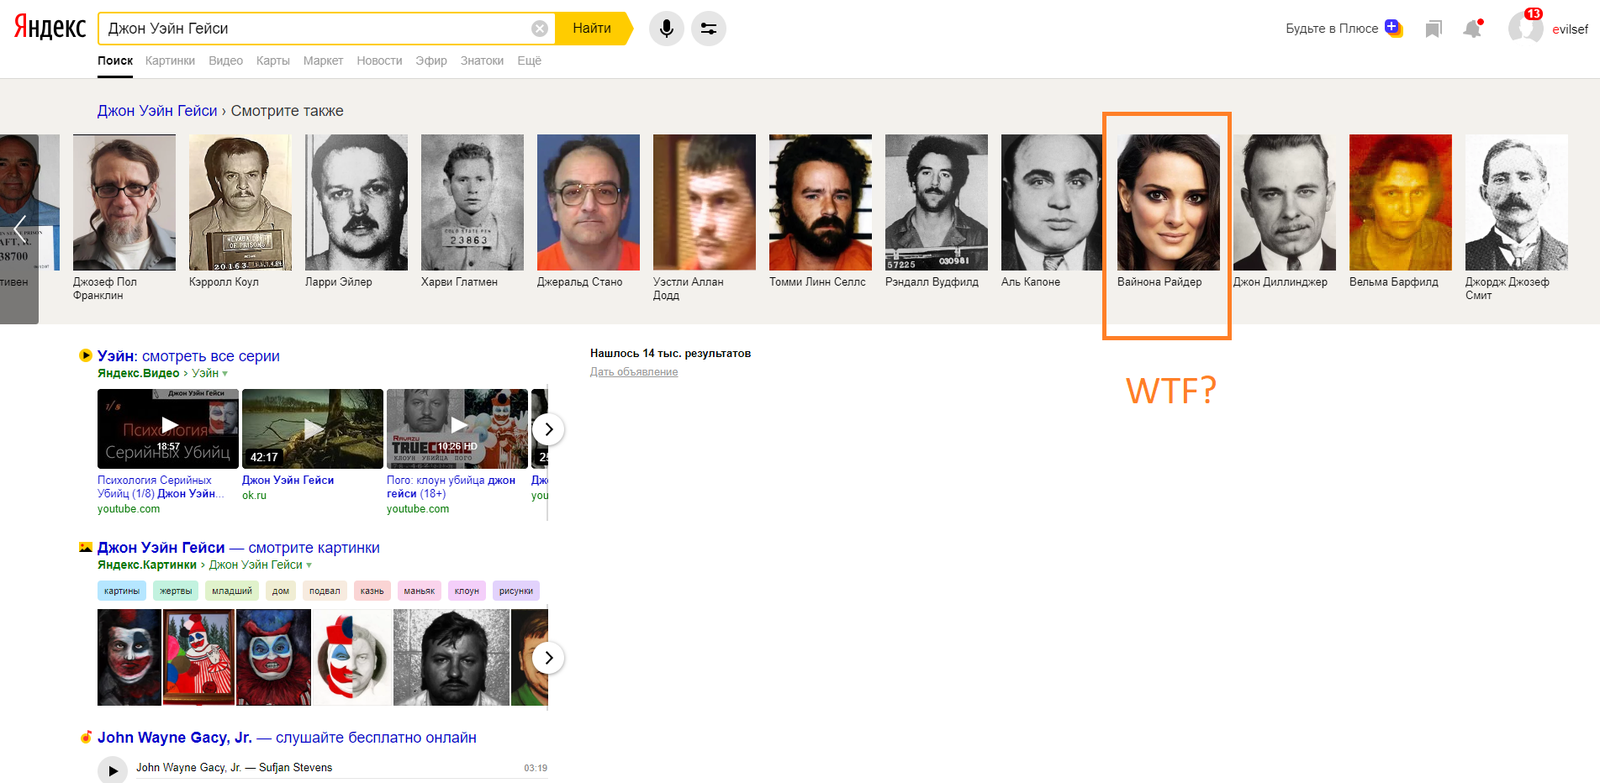 Yandex knows something about Winona Ryder - Yandex Search, Maniac, John Wayne Gacy, Serial killings, Winona Ryder